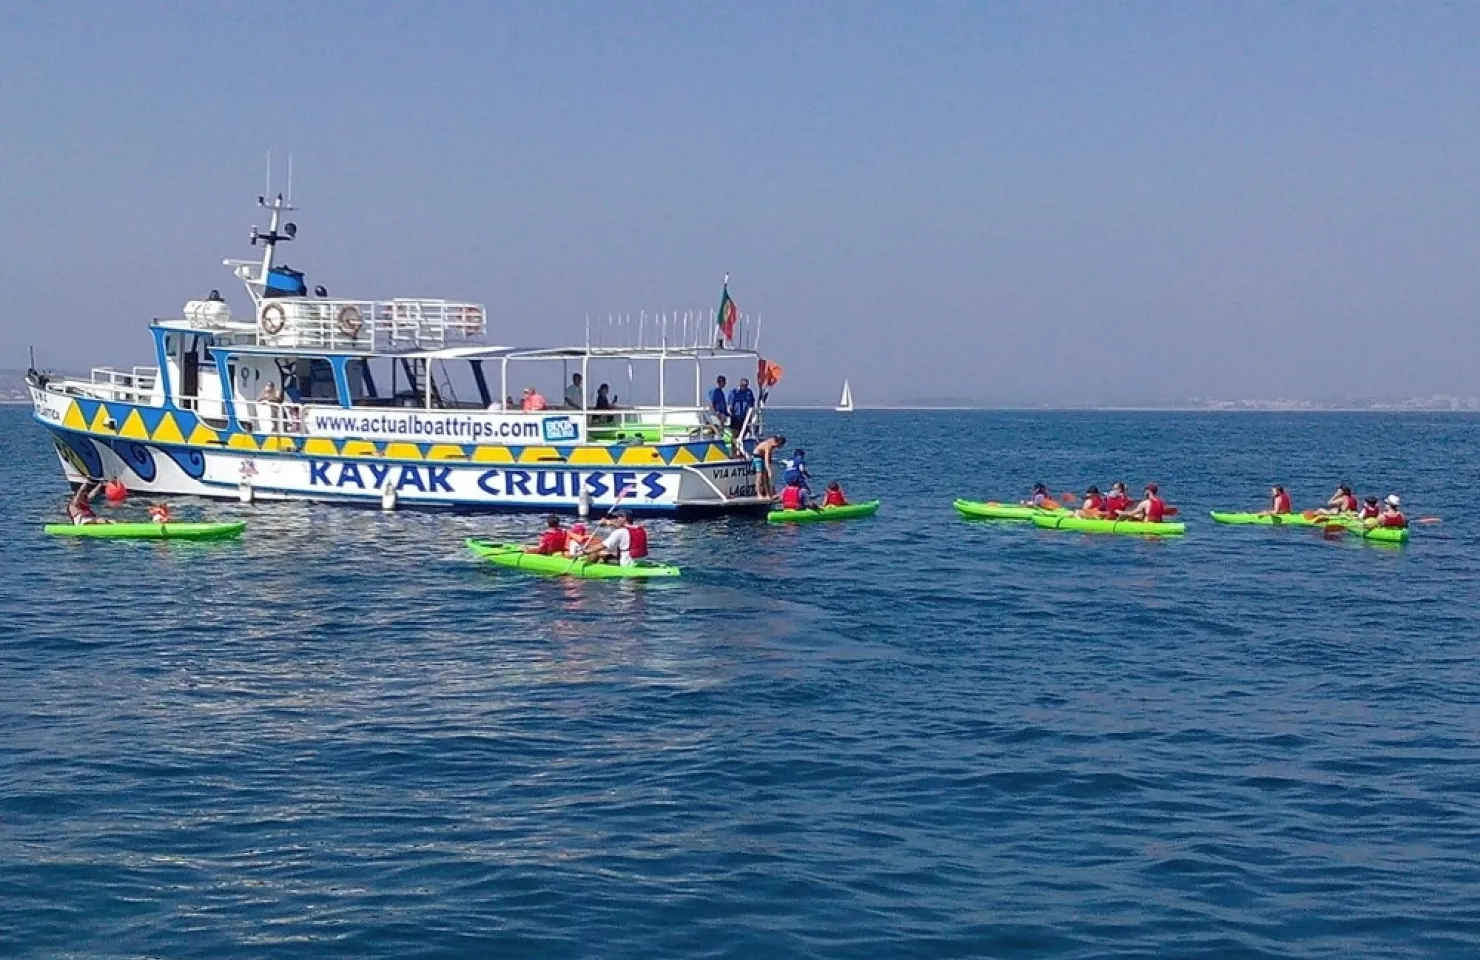 Actual Kayak Tour Lagos - Algarve Boat Trips and tours